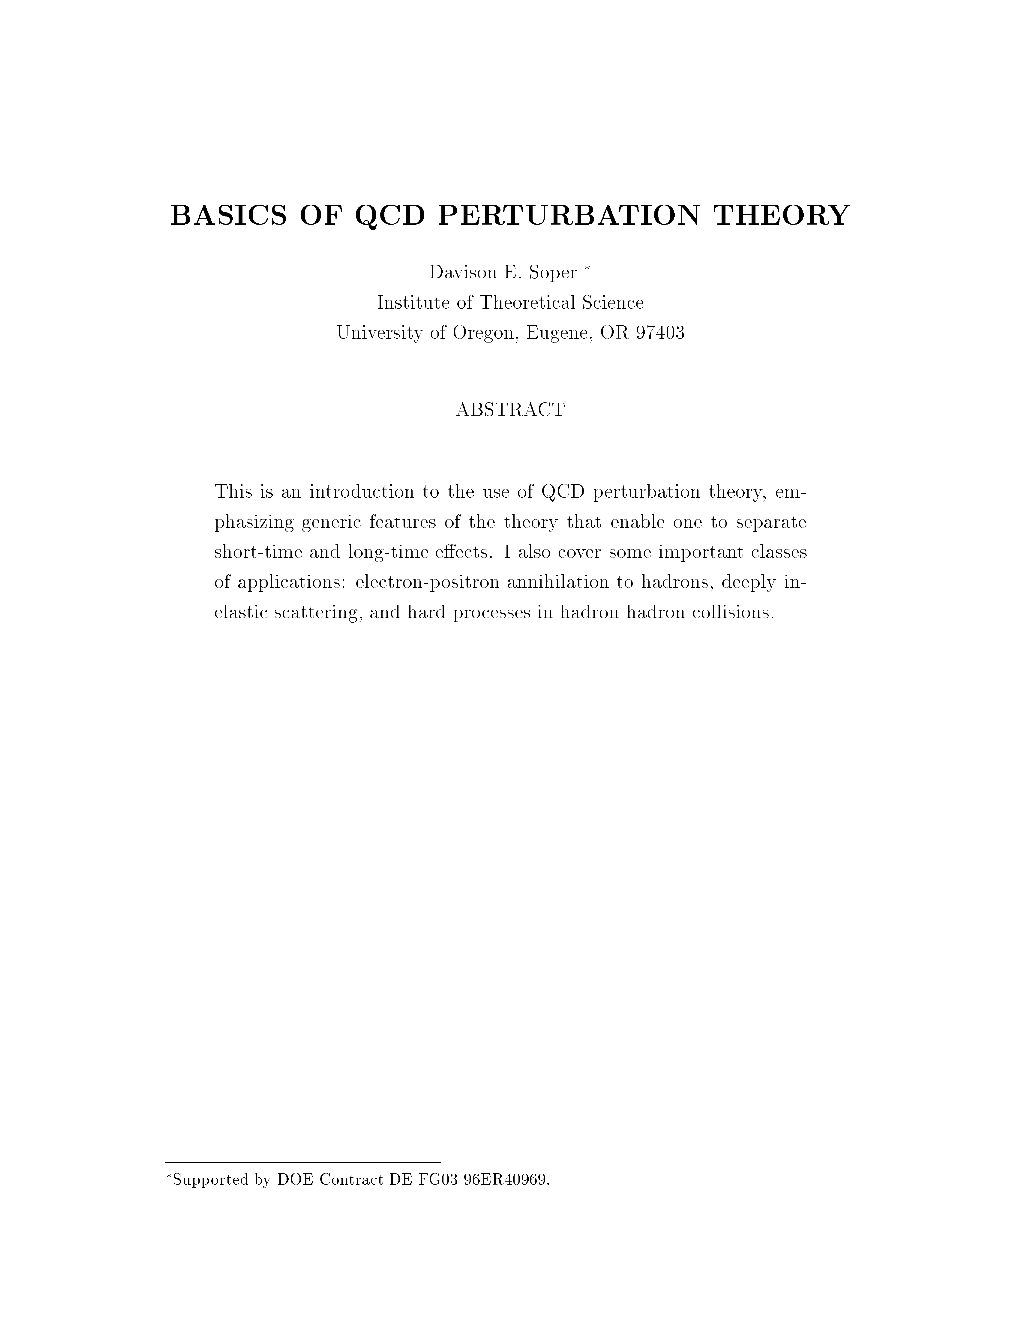 Basics of Qcd Perturbation Theory